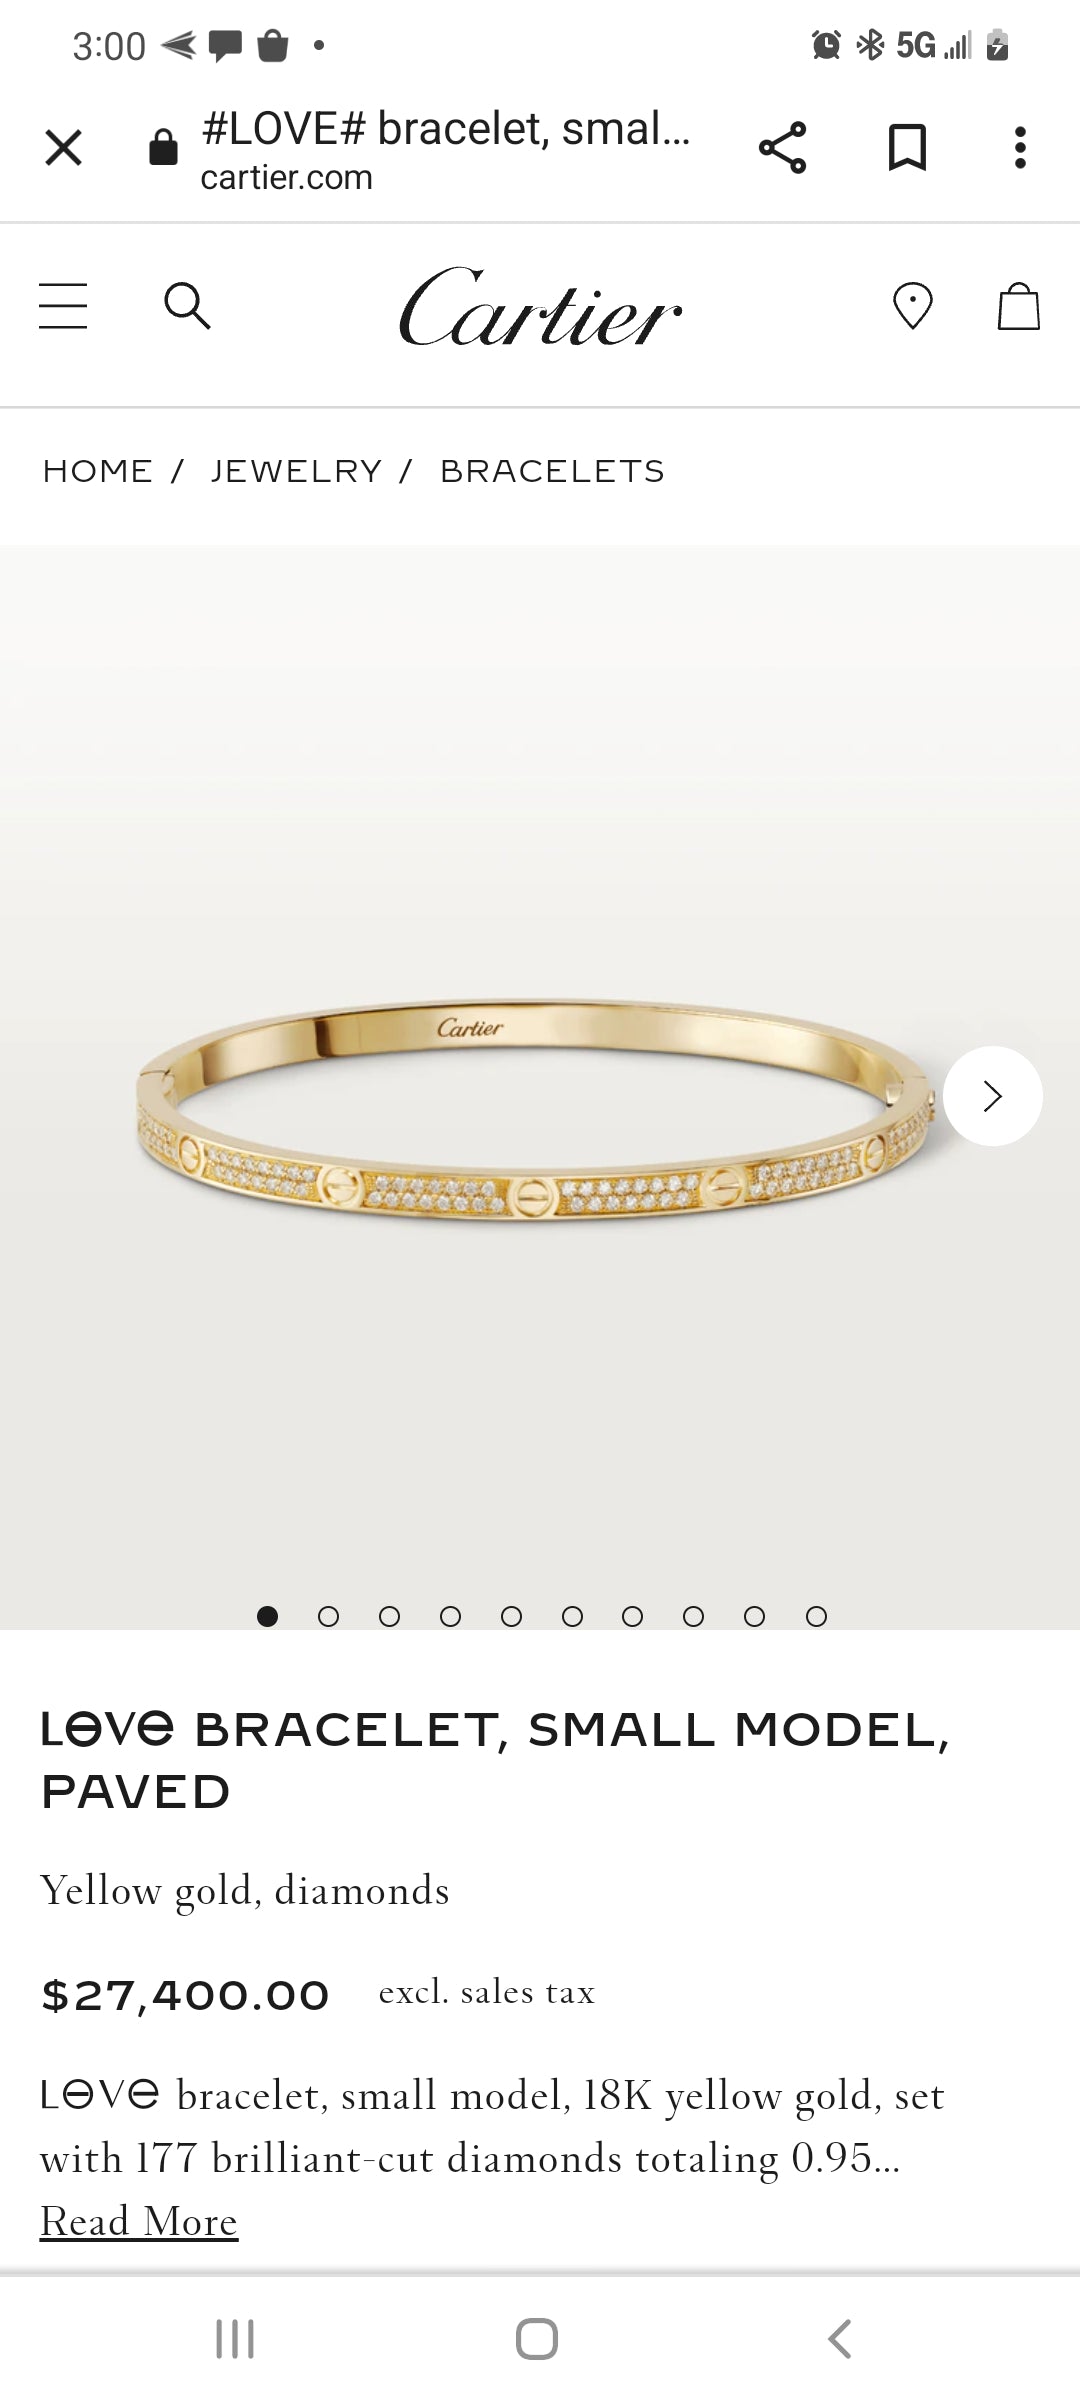 Love bracelet, small model